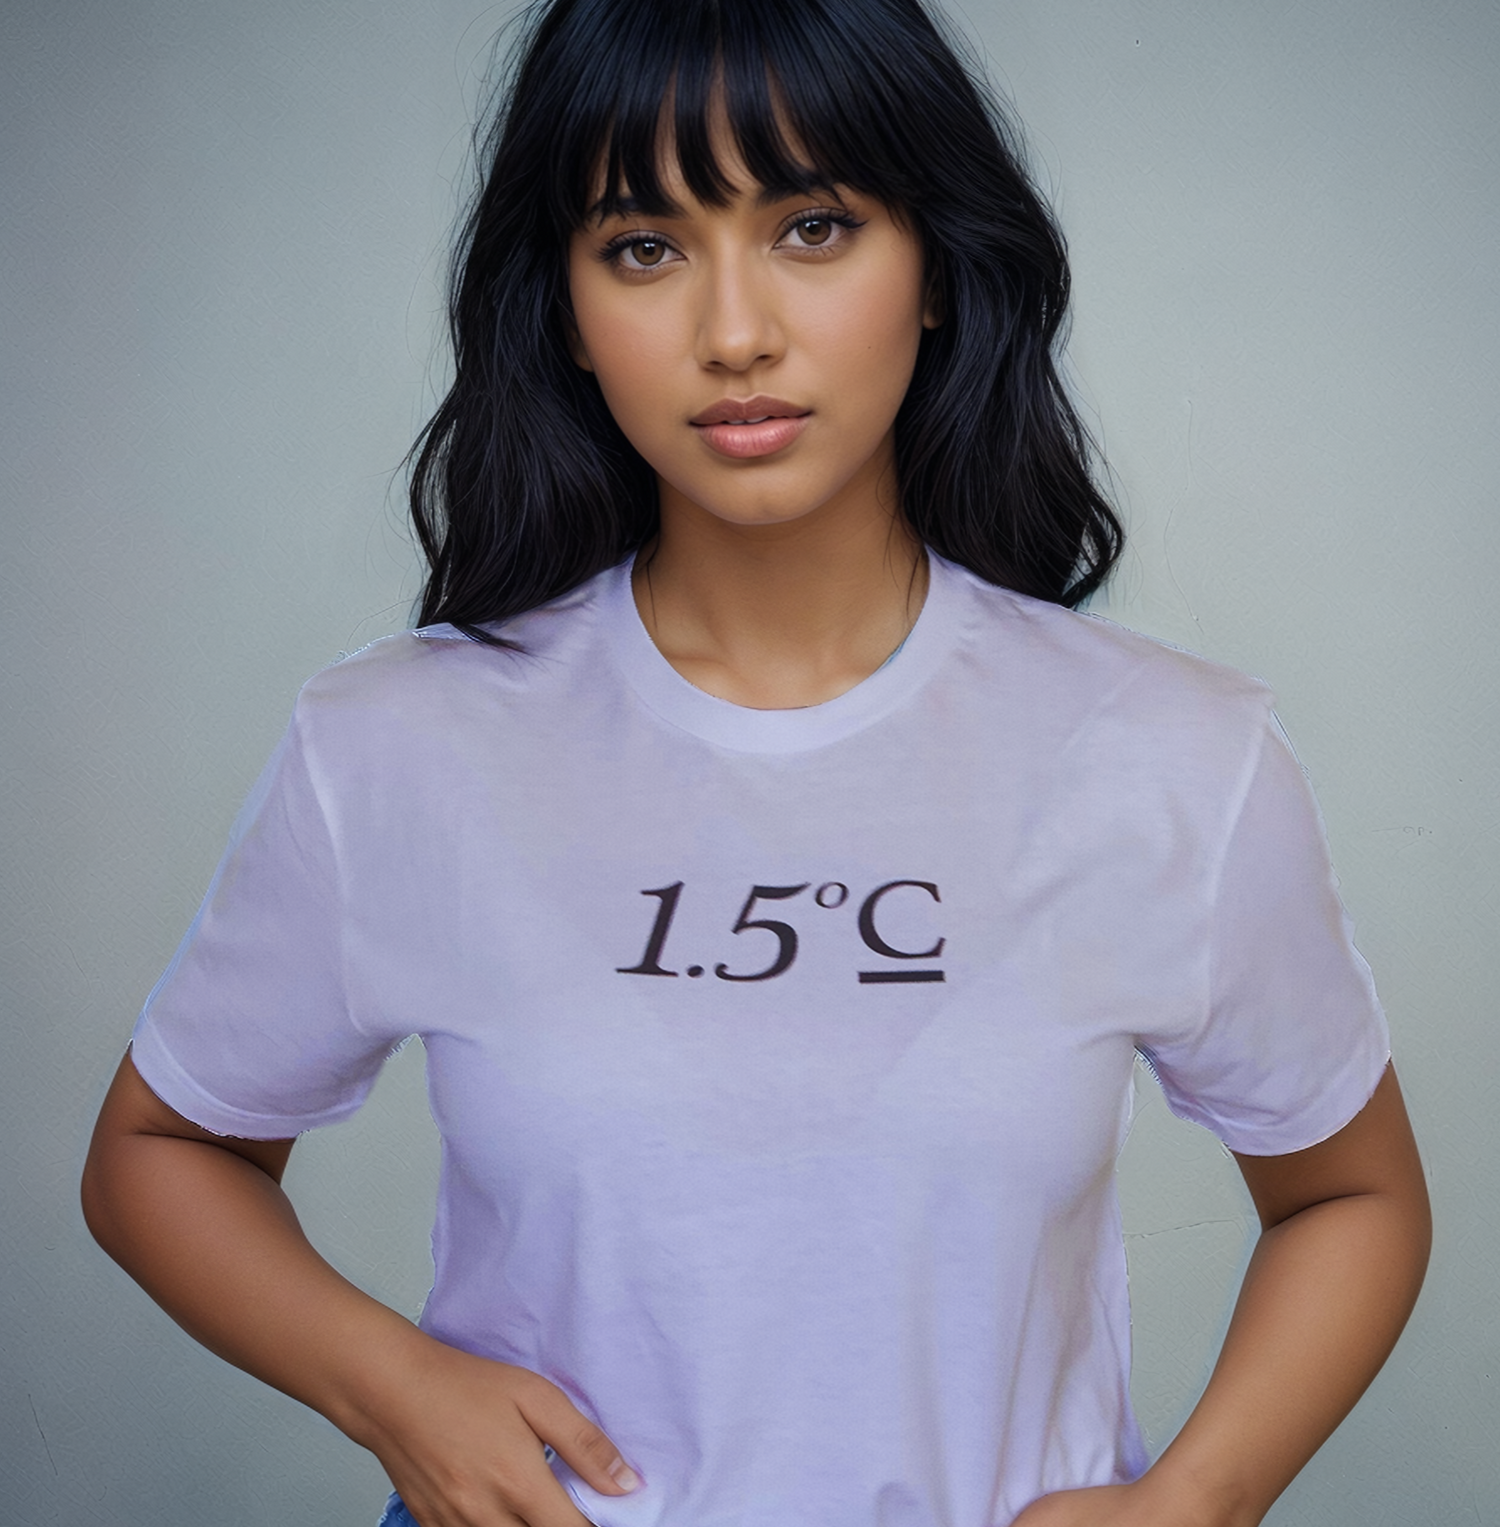 1.5C Degrees Earth Advocacy T-Shirt_Involvd Social Advocacy Clothing Brand